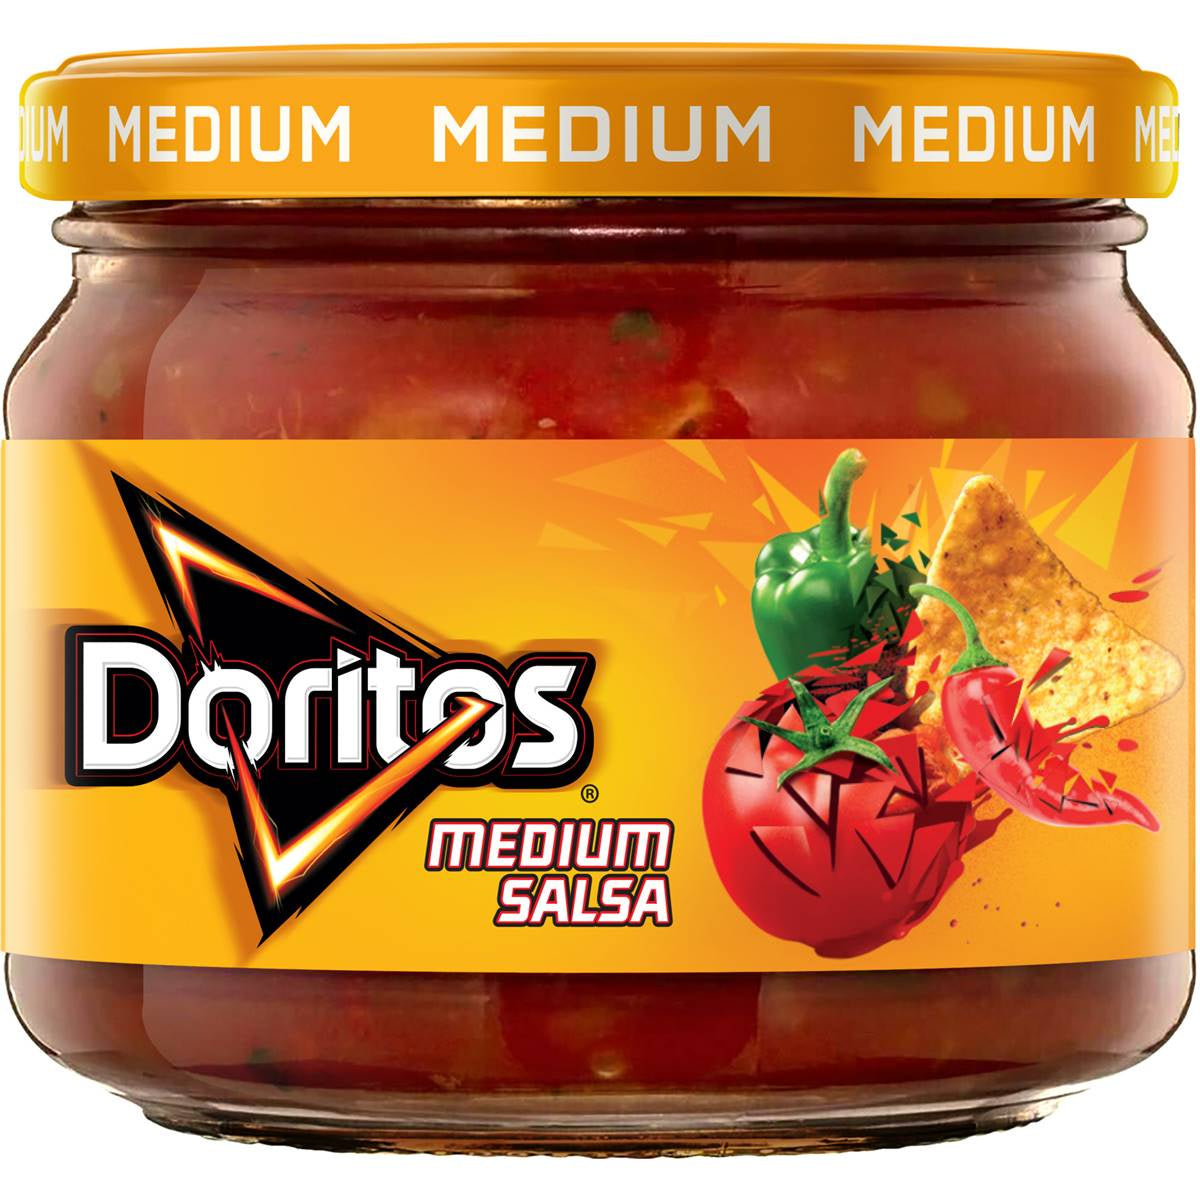 Doritos Salsa Medium 300g